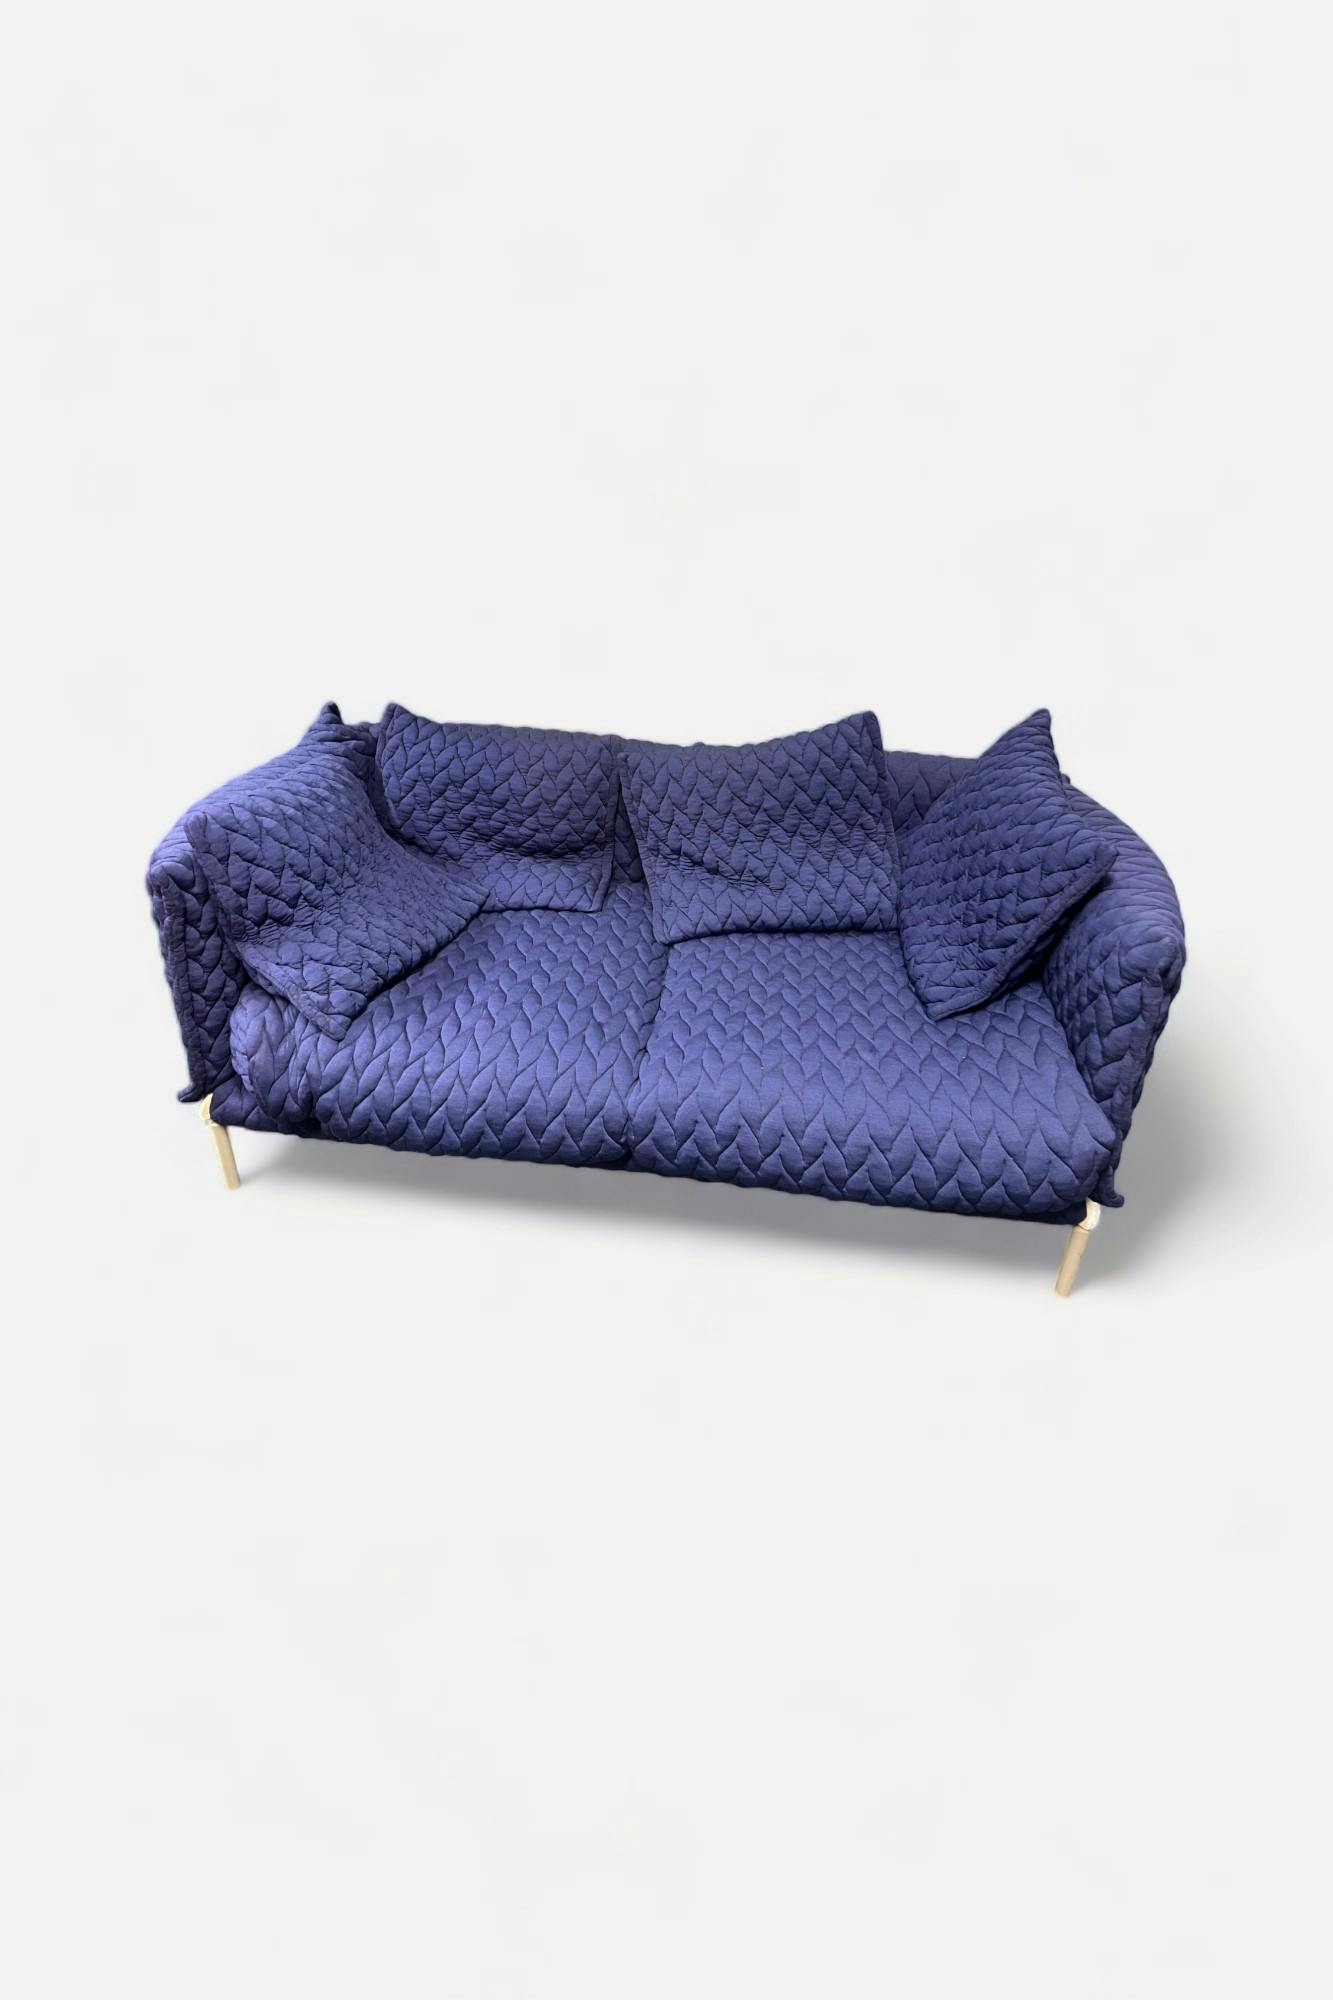 MOROSO Canapé design Gentry Patricia Urquiola - Relieve Furniture